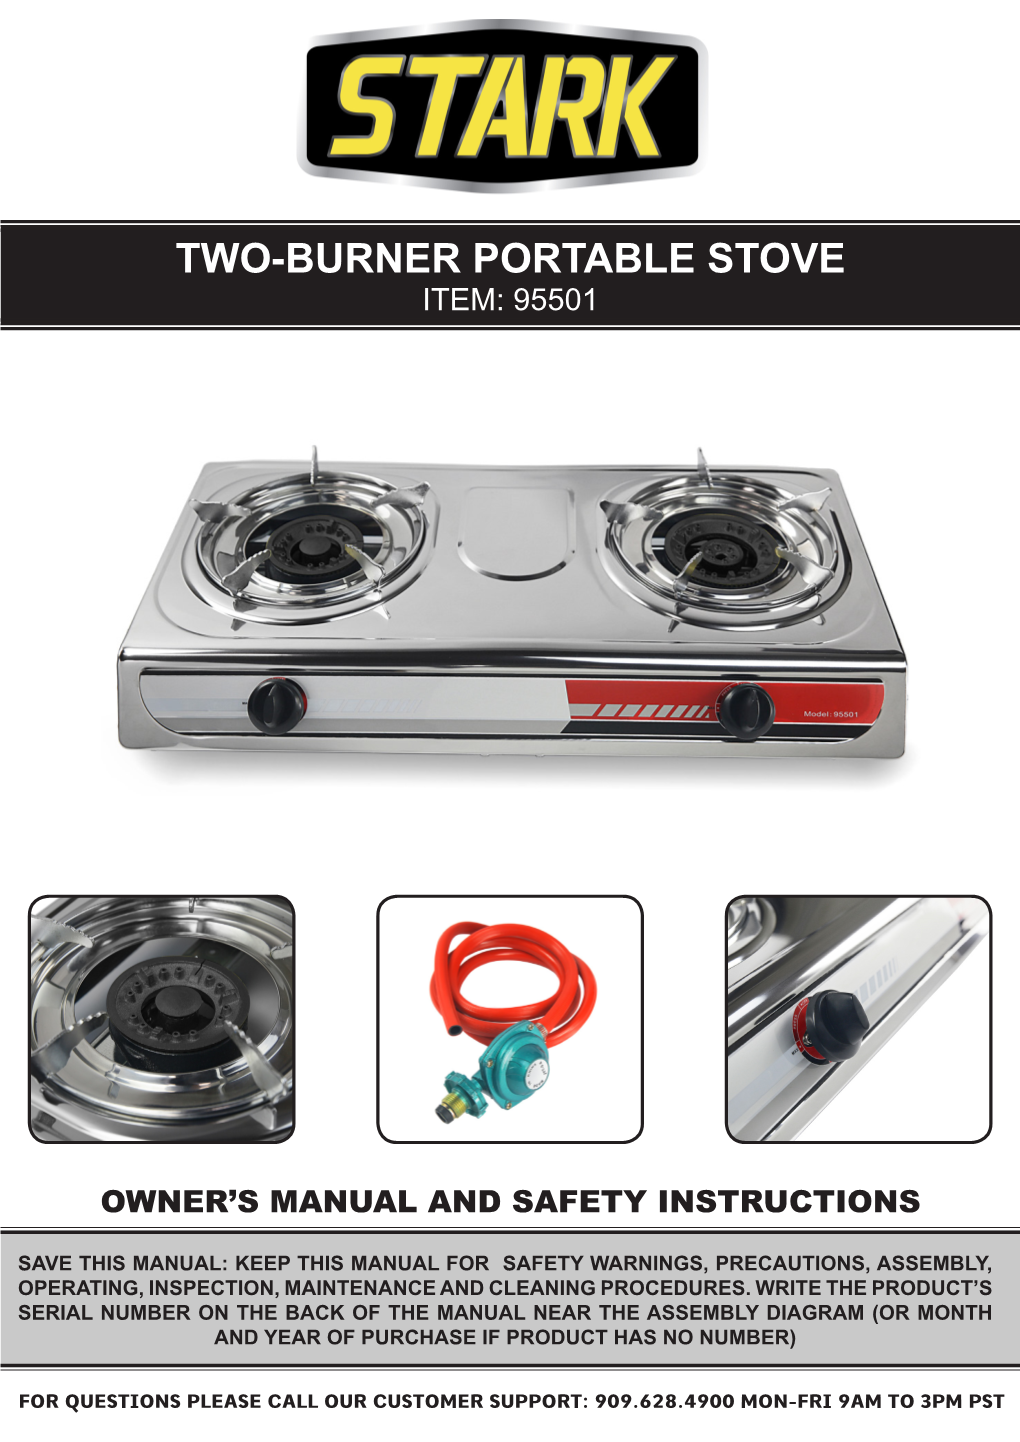 Two-Burner Portable Stove Item: 95501